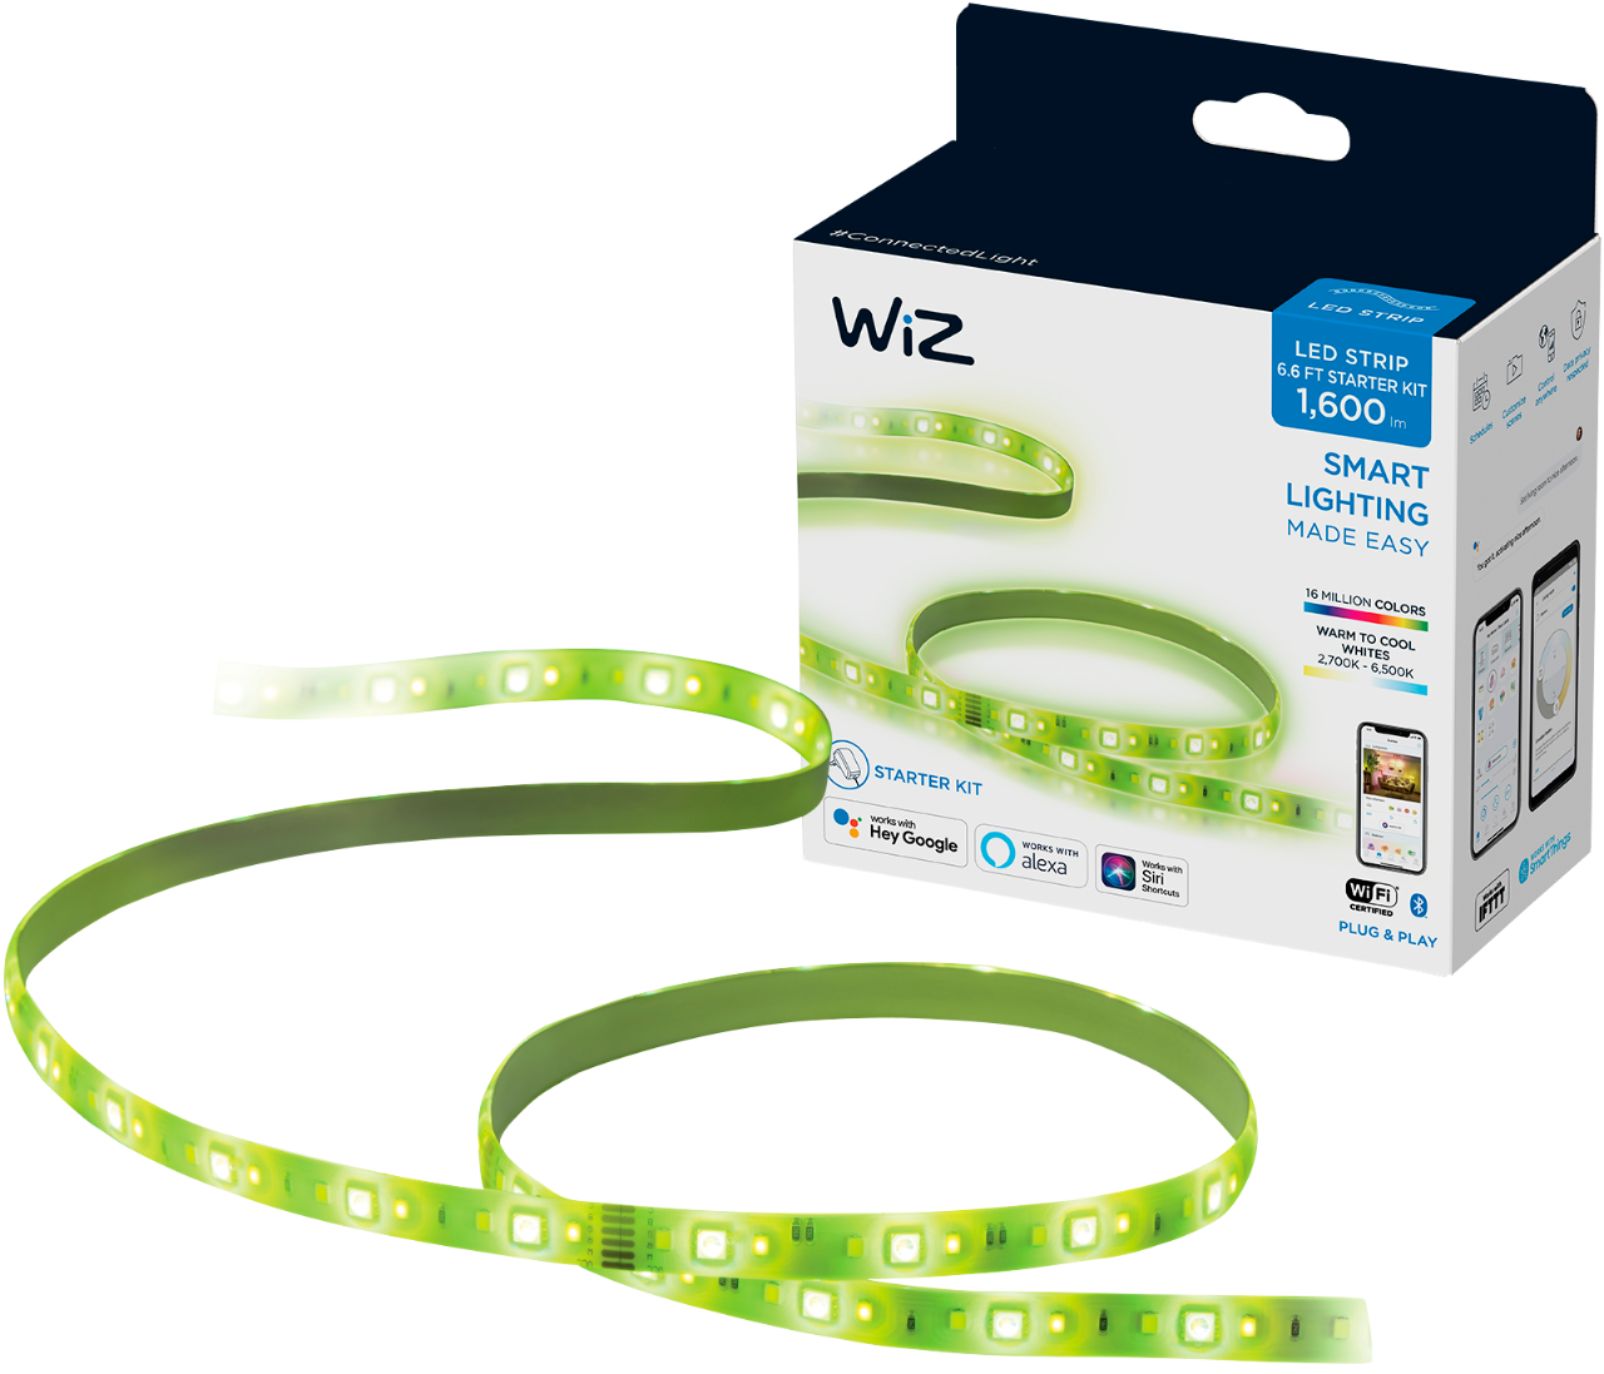 Kit WiZ 603530 Starter Multi Best 2M - Buy 1600lm Color Lightstrip